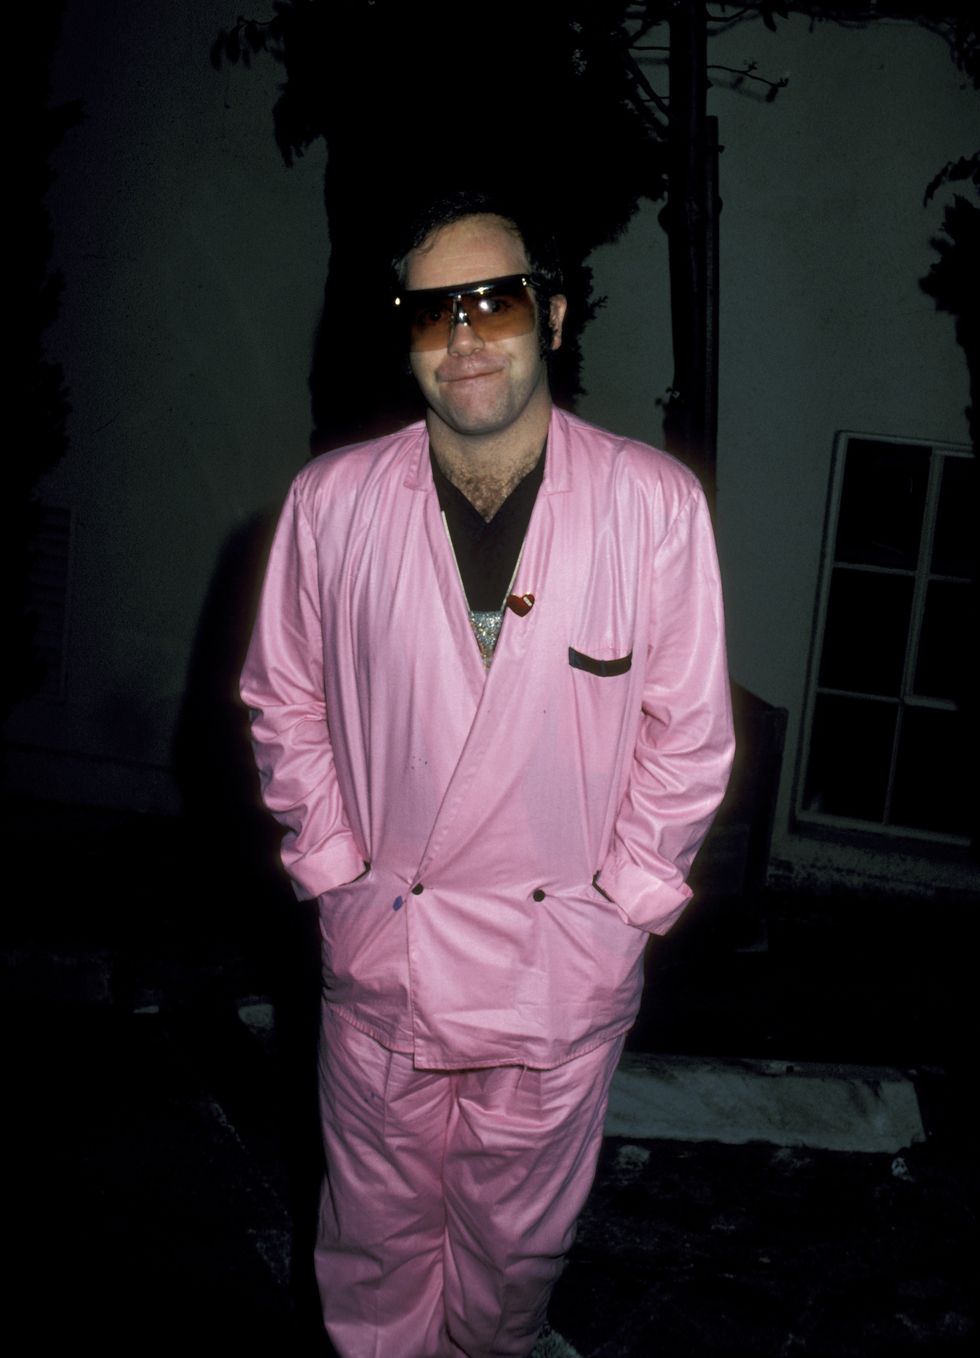 Elton John Sunglasses Photos - 50 Years of Elton John's Fabulously